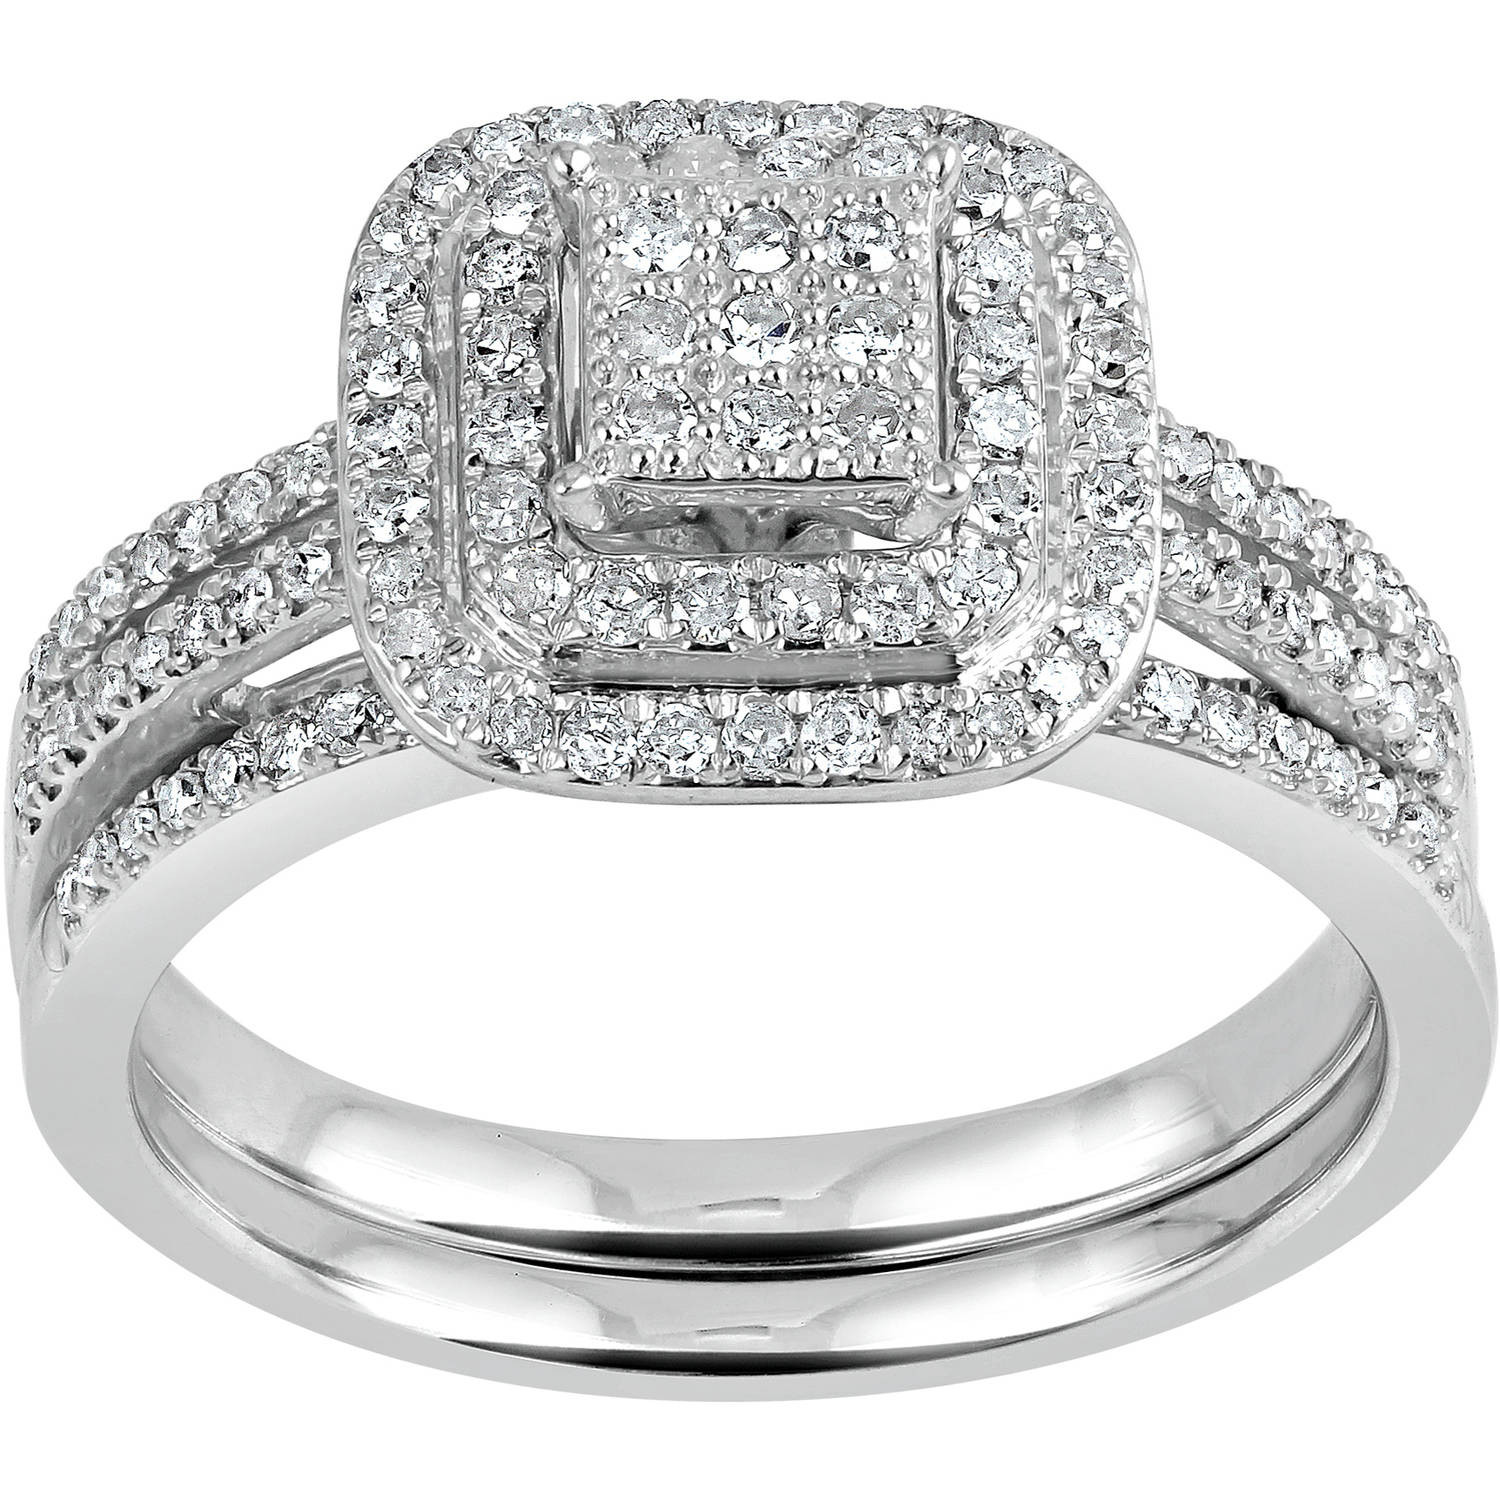 Sterling Silver Diamond Wedding Ring Sets
 Forever Bride 1 4 Carat T W Diamond Bridal Set in